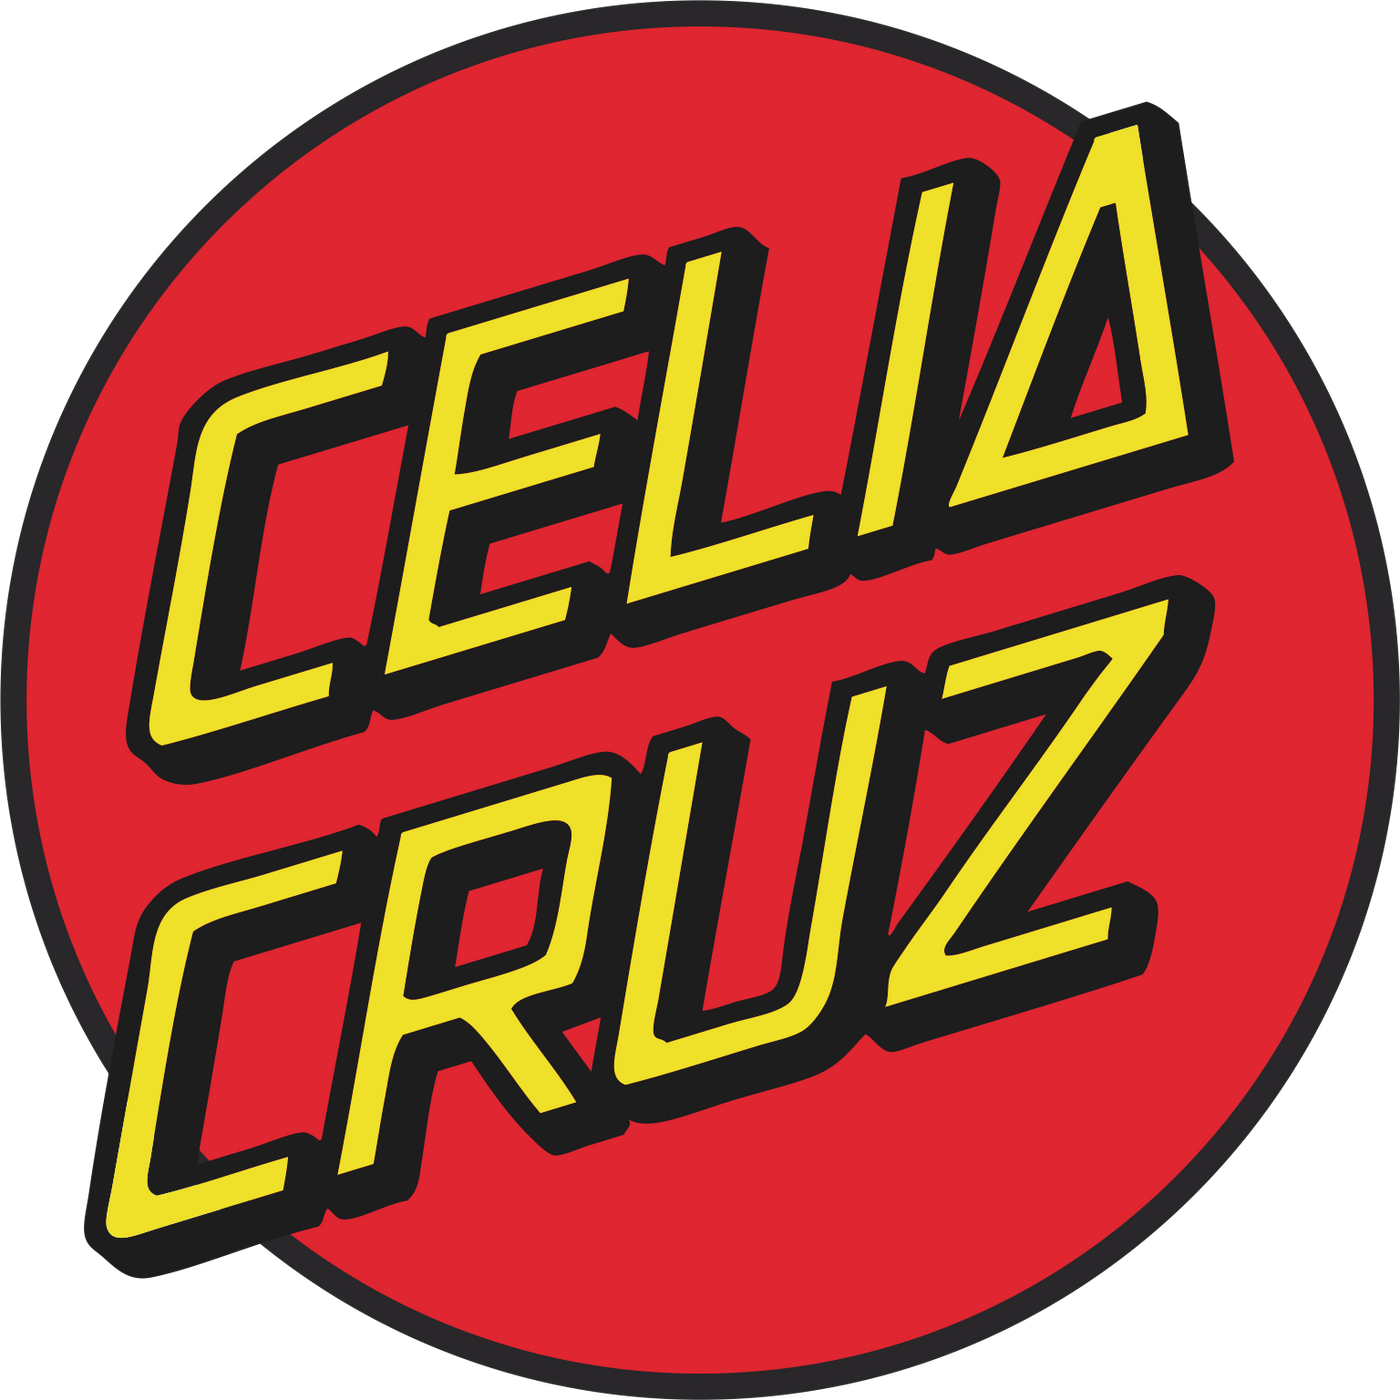 Celia Cruz doble diseño